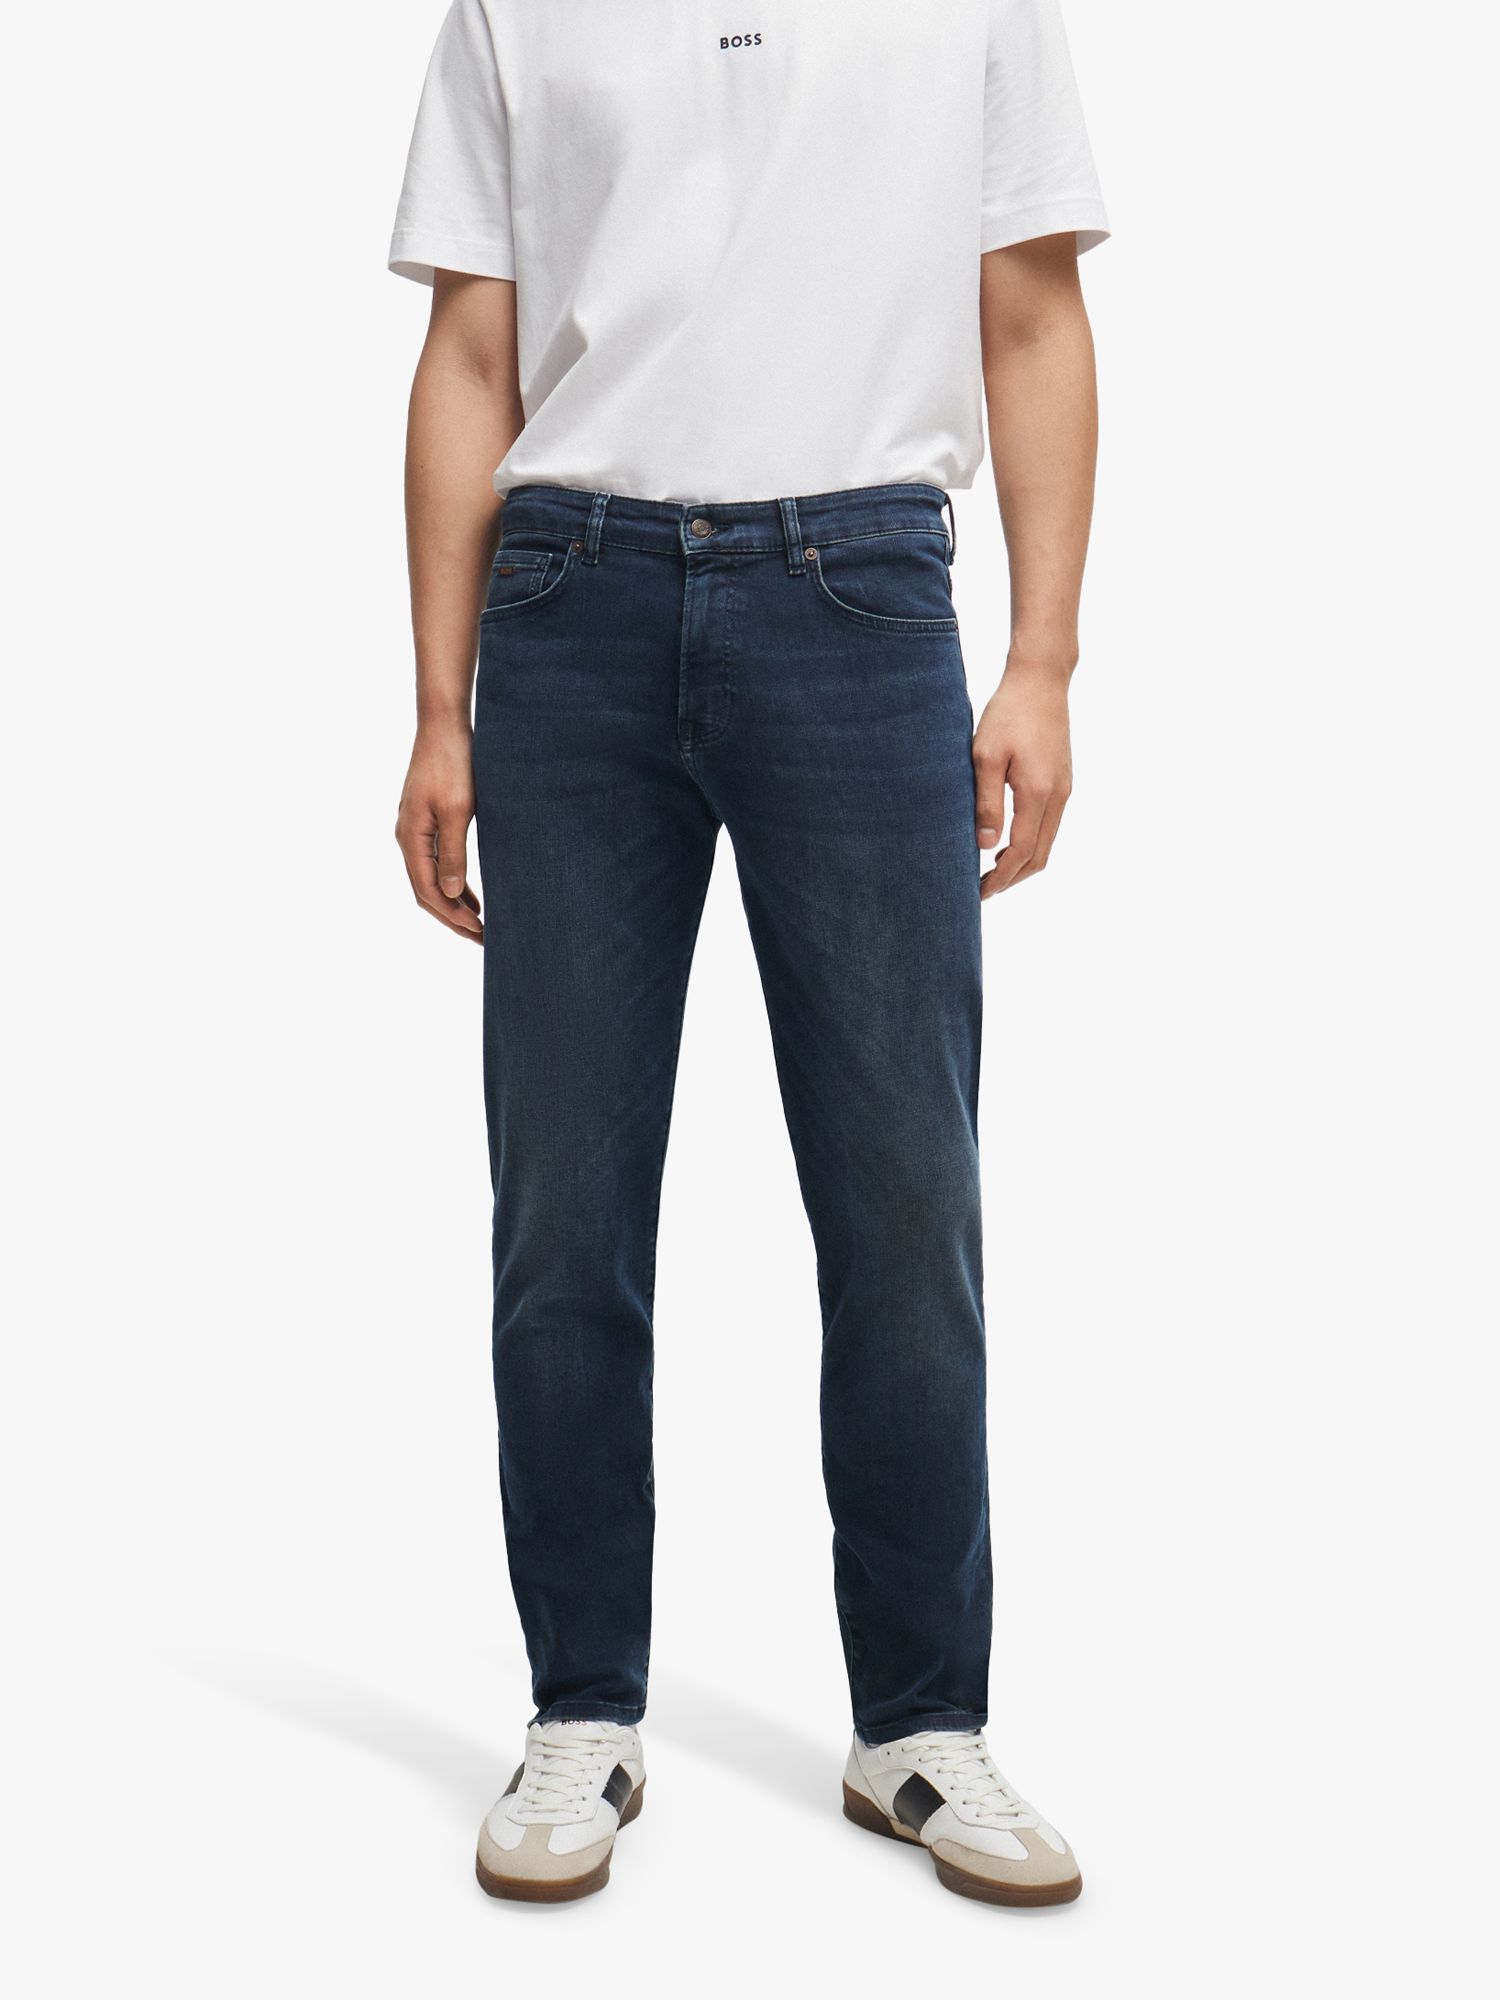 BOSS Maine Regular Fit Jeans, Navy, 36L